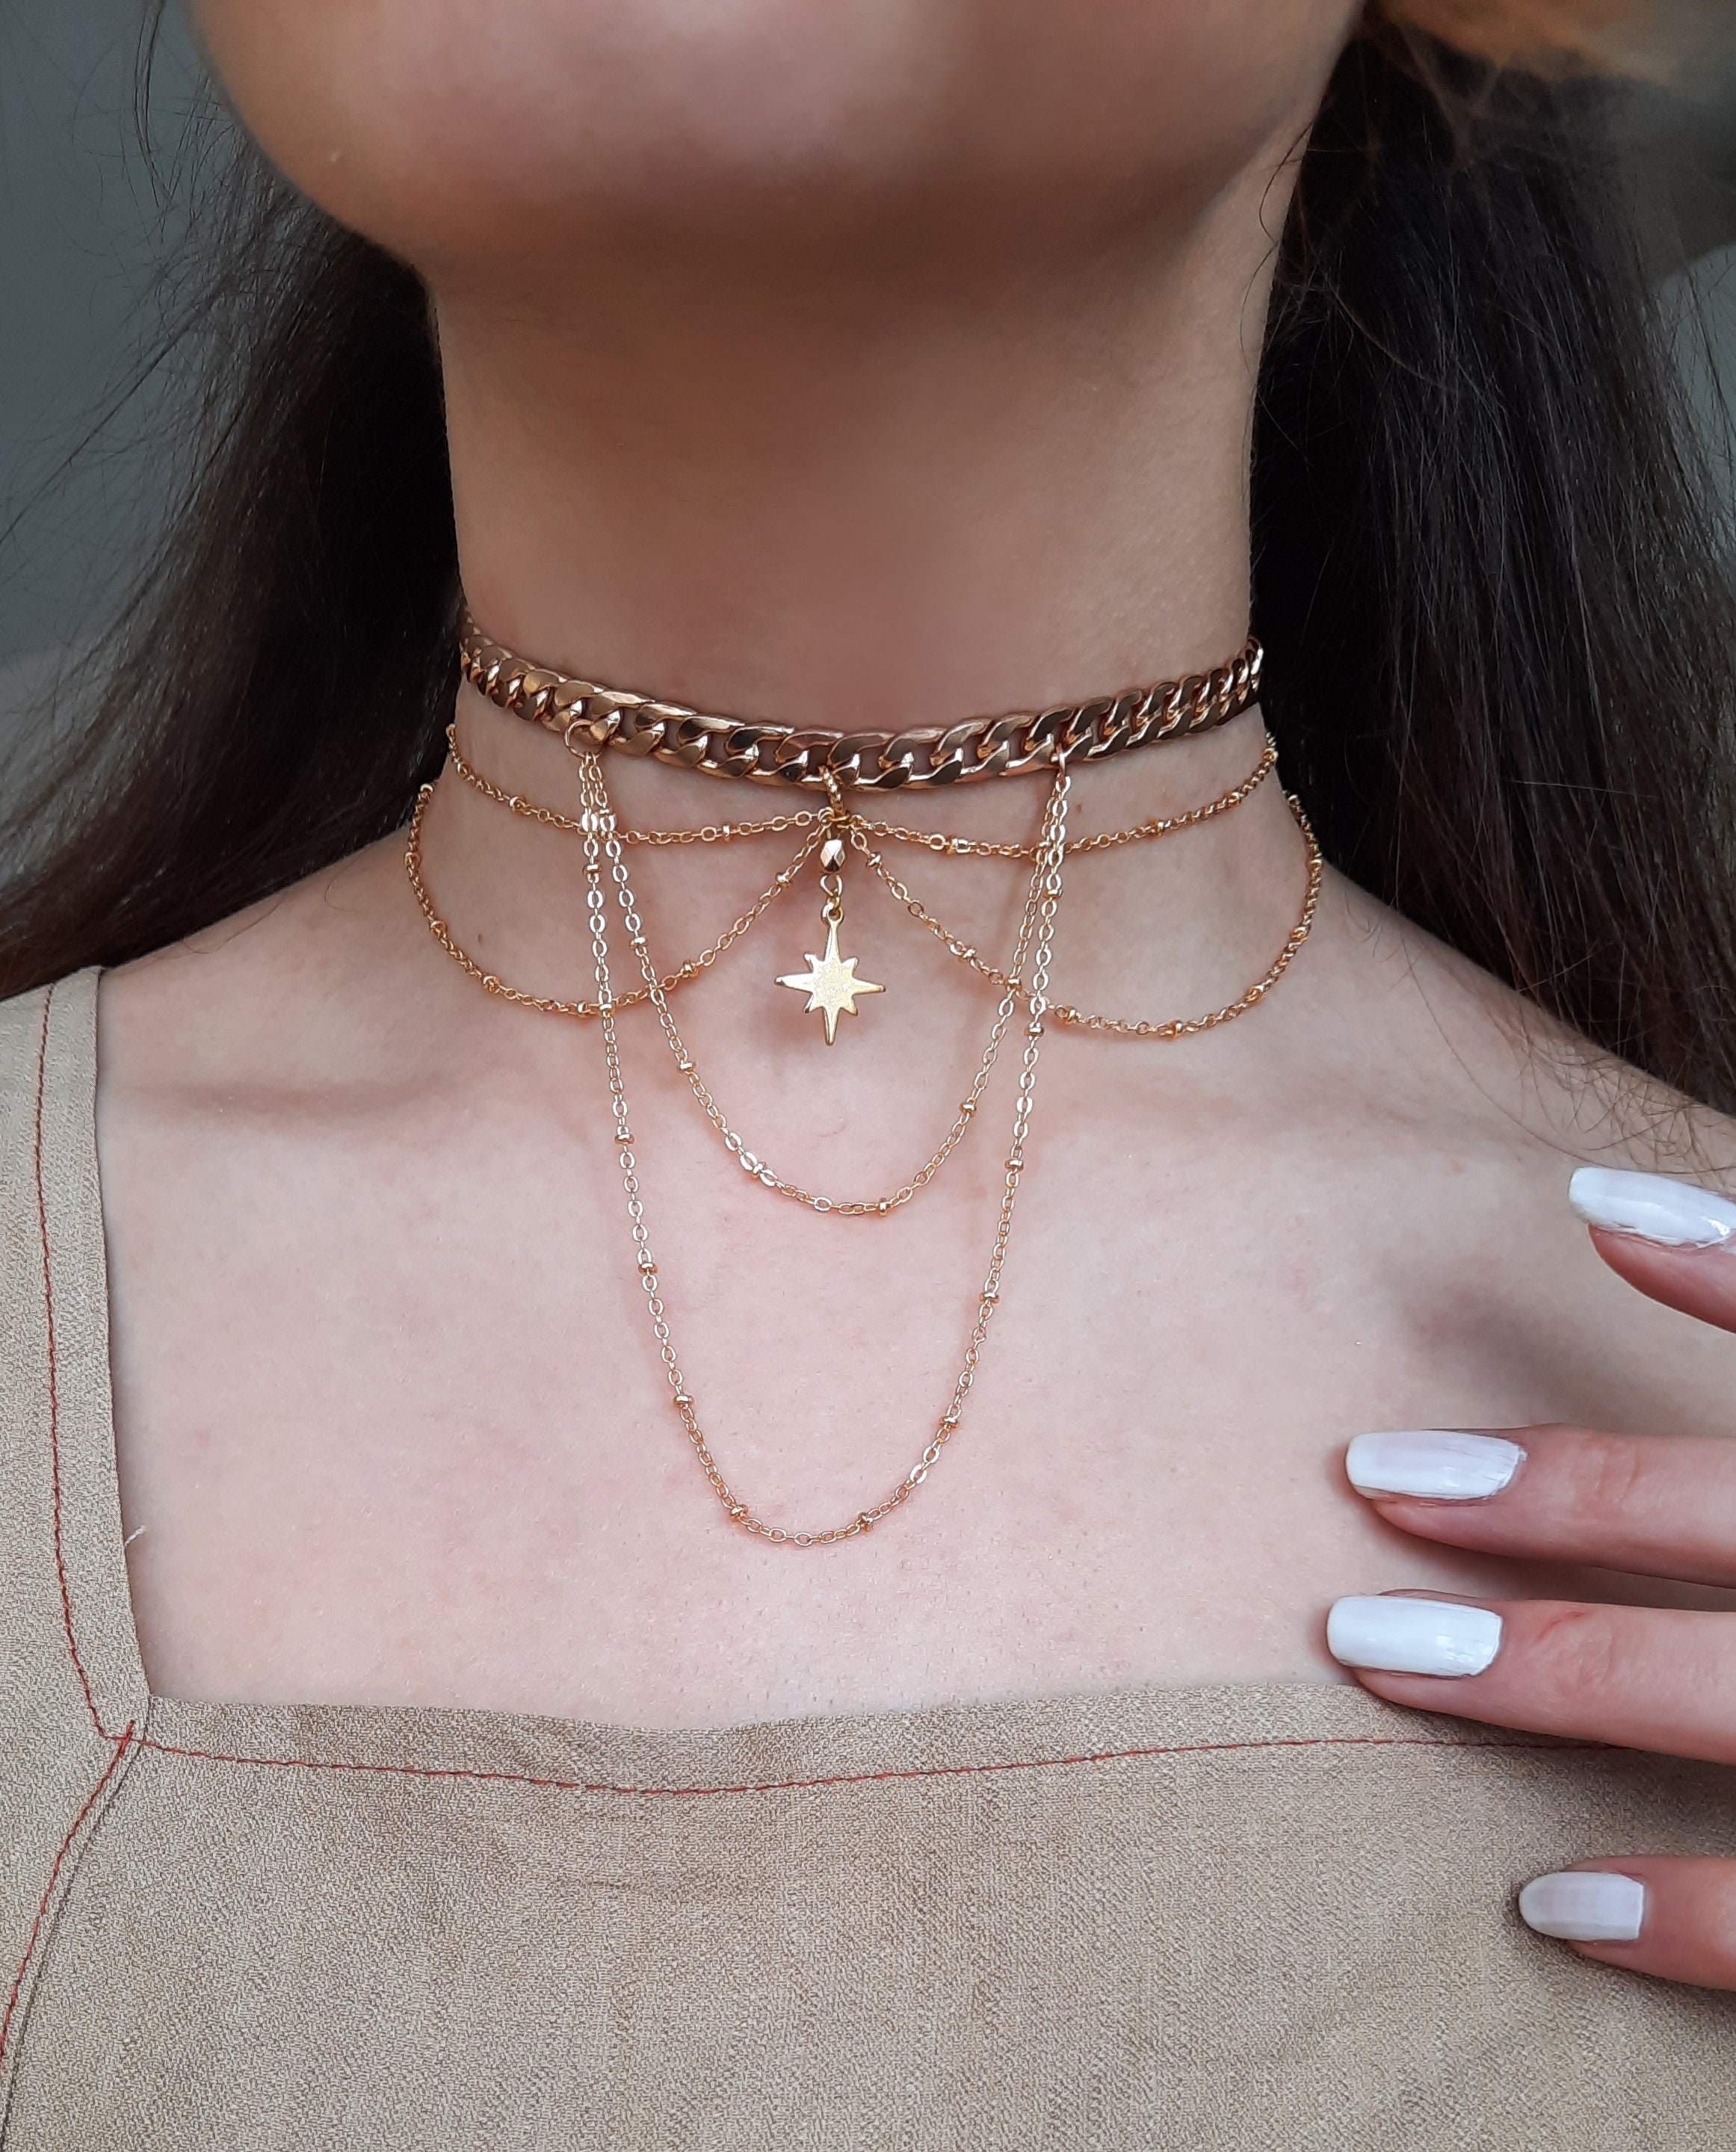 Gold Choker Necklace, Chokers, Jewelry, Chains 